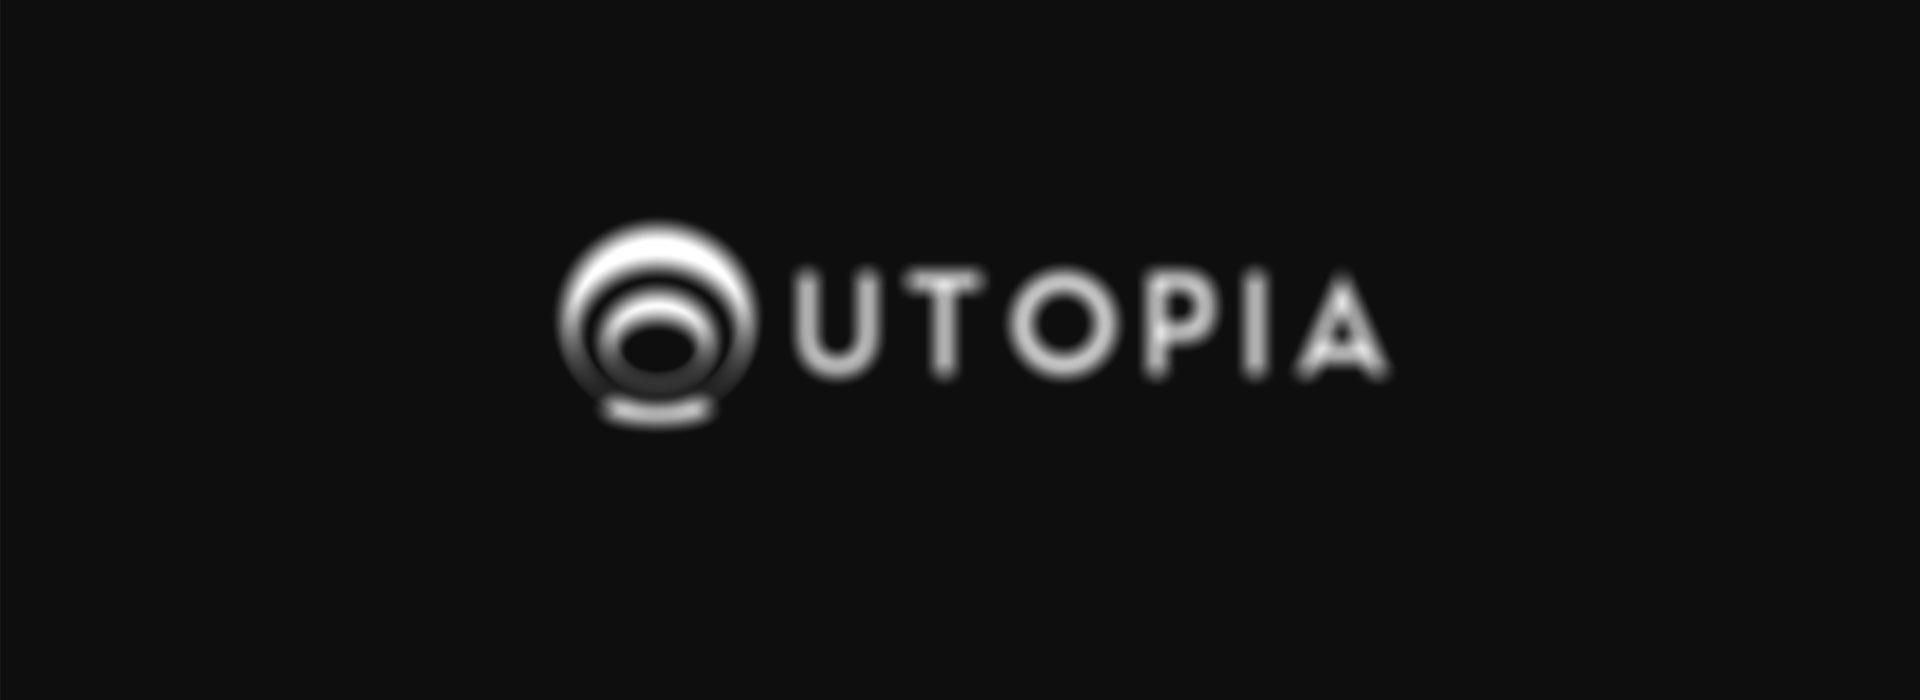 utopia-software